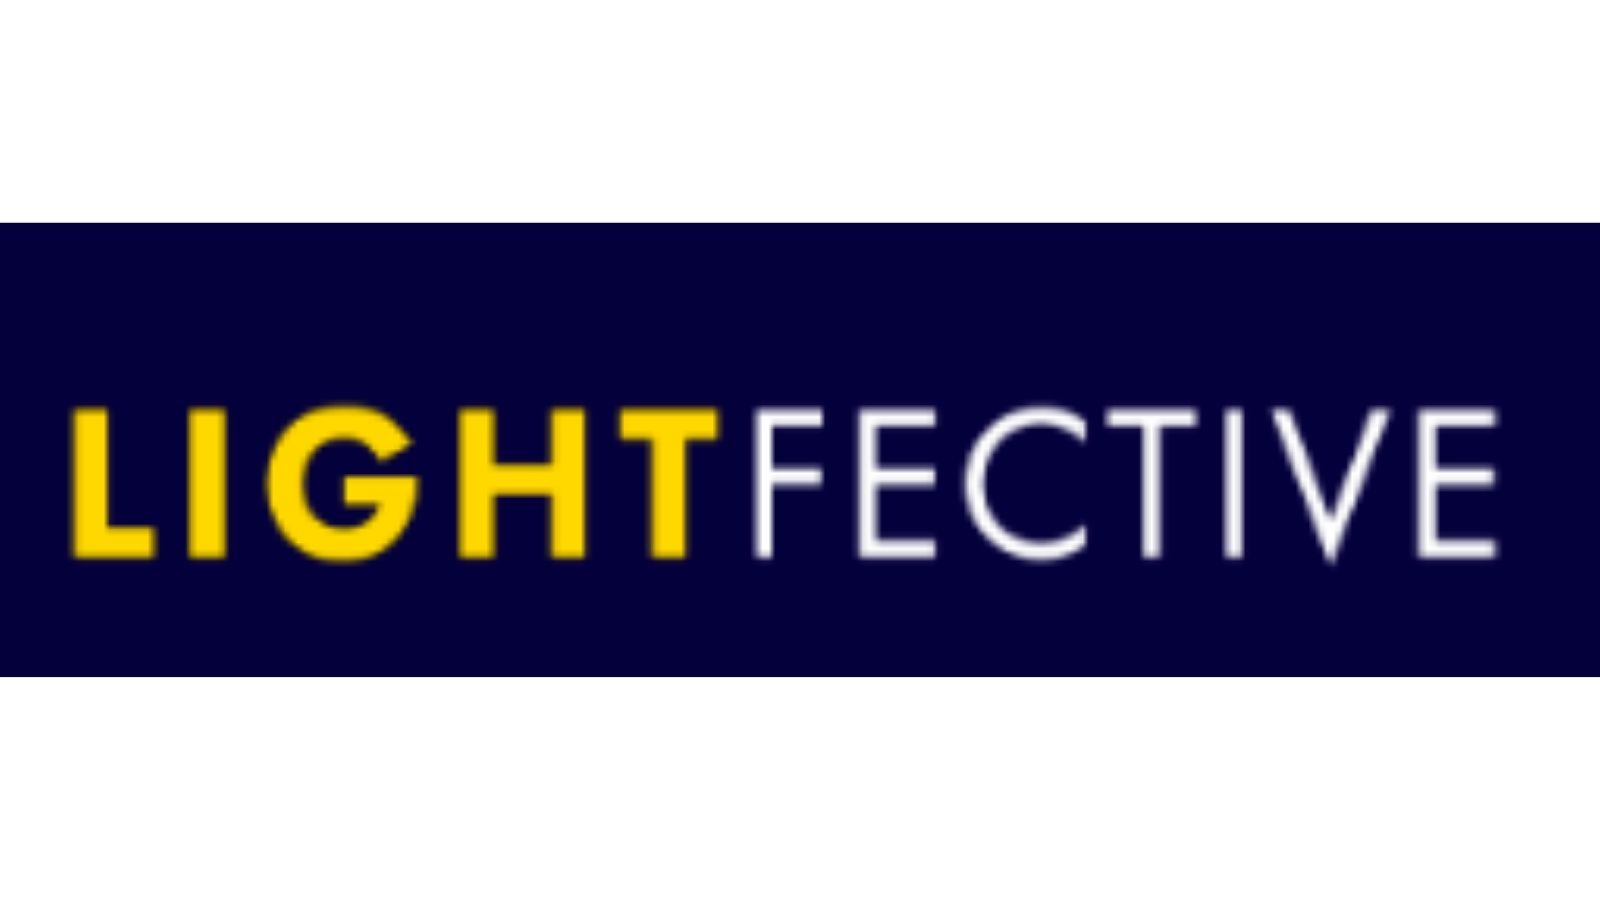 Lightfective 是医疗和美容技术的创新者